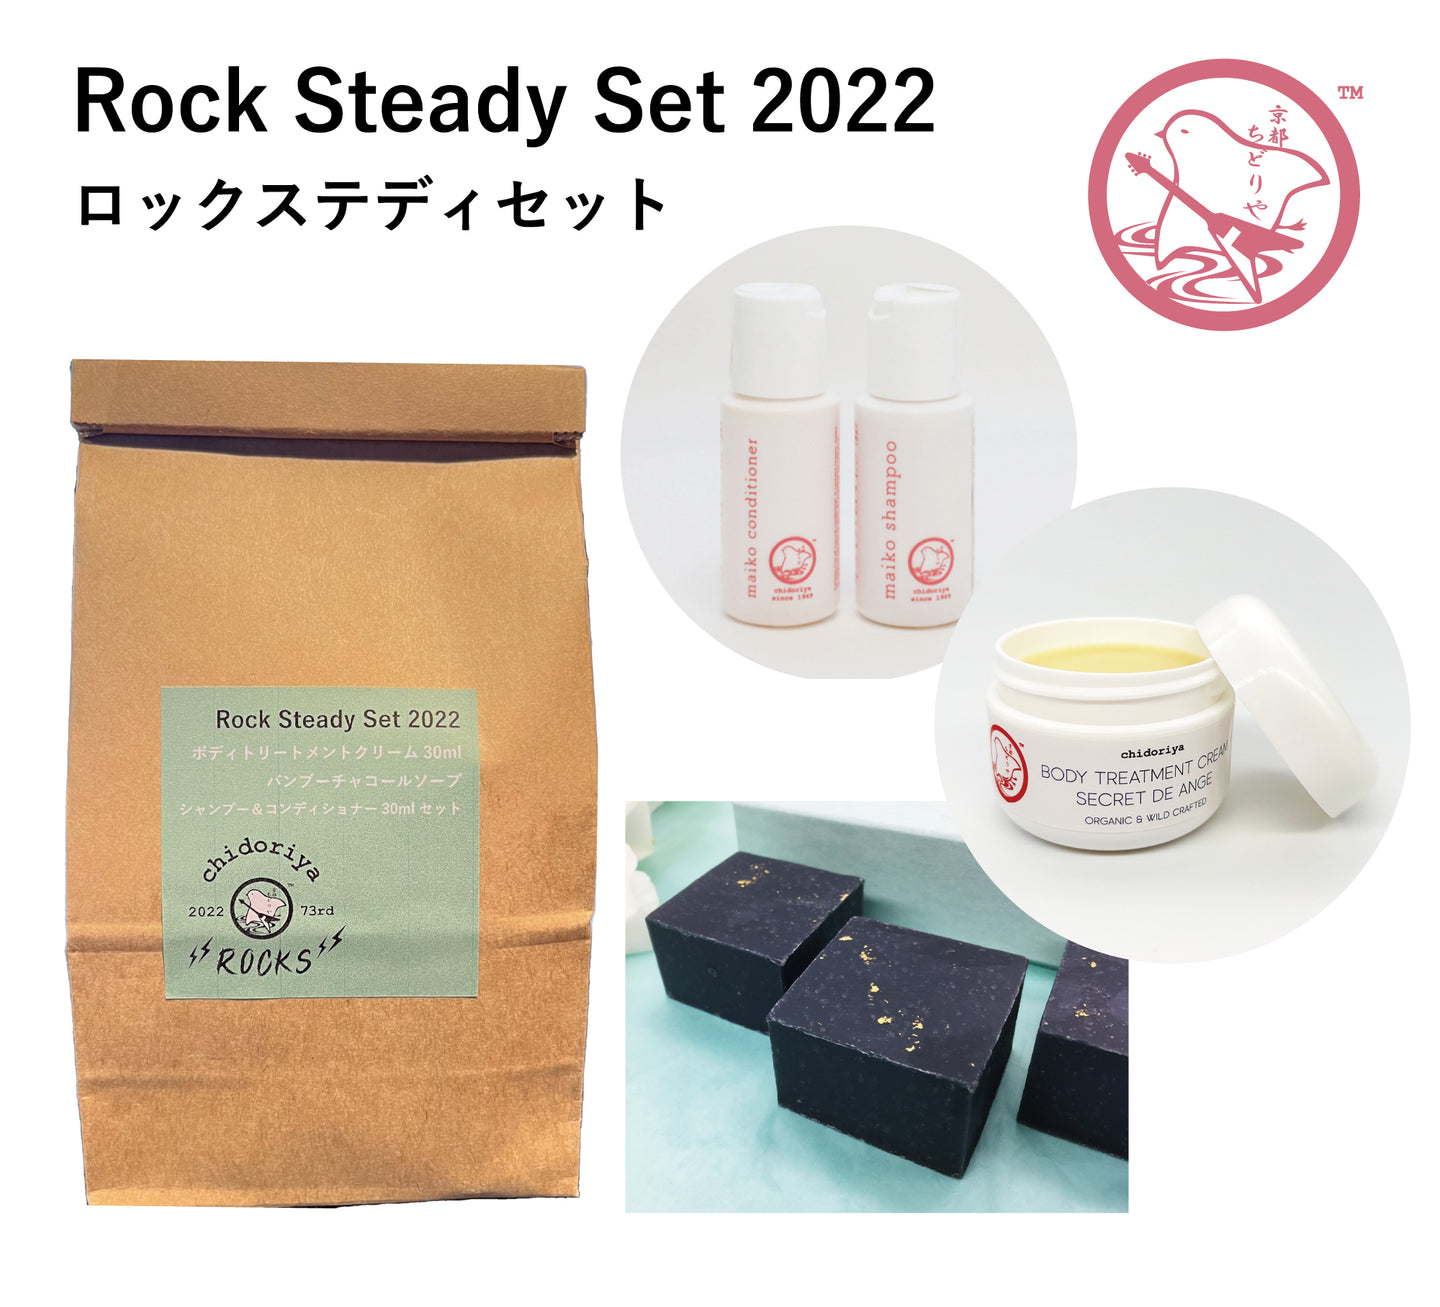 chidoriya Rocks Rock Steady Set 2022